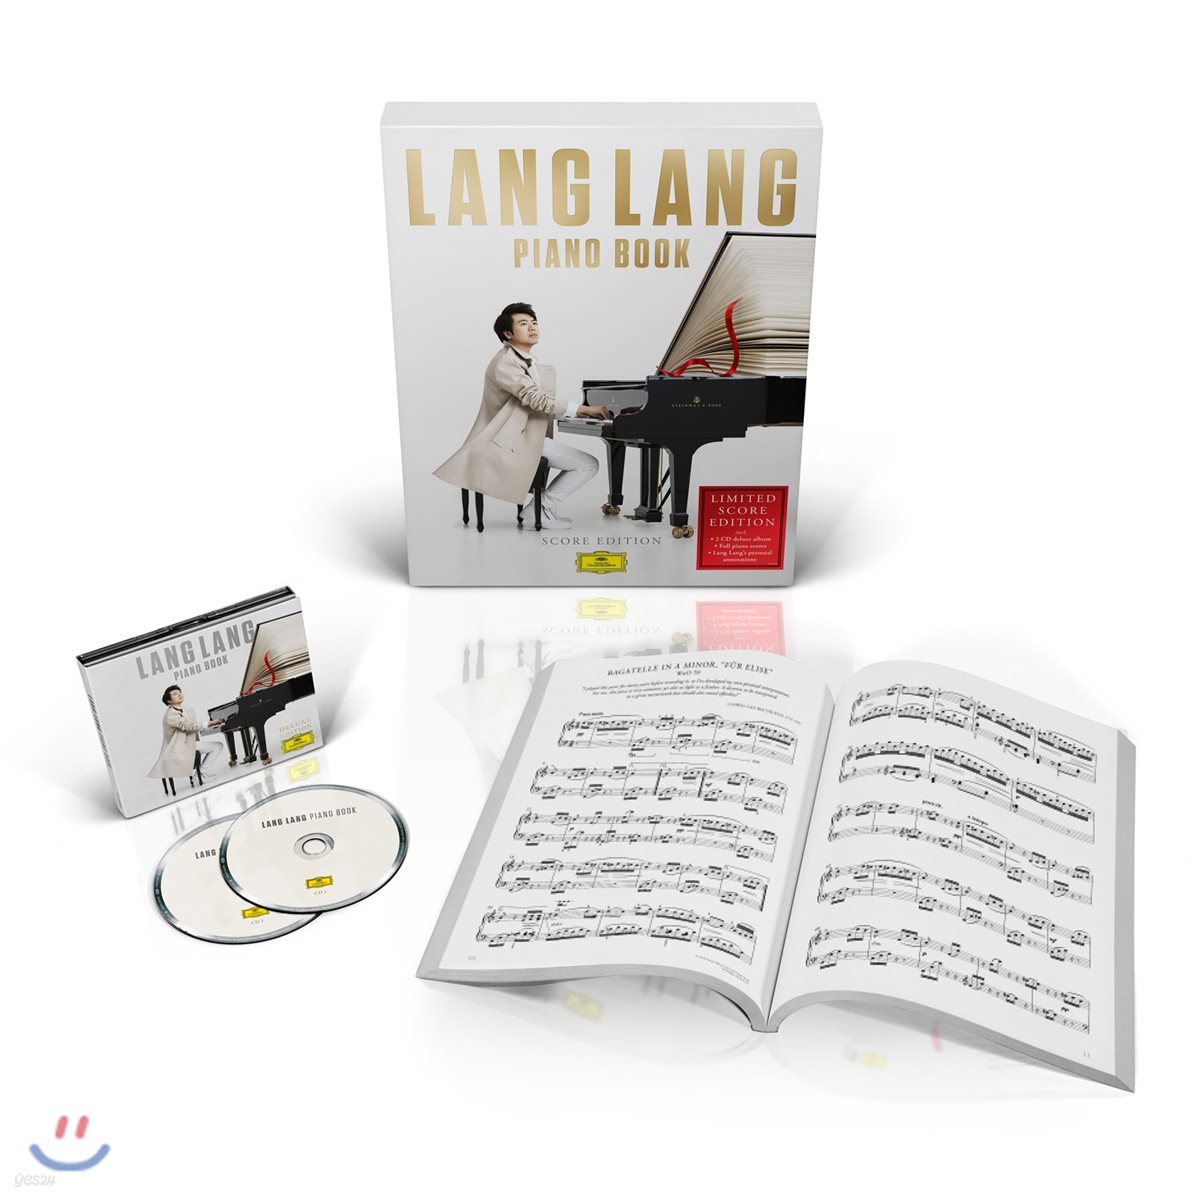 Lang Lang 랑랑 피아노 연주집 '피아노 북' (Piano Book)